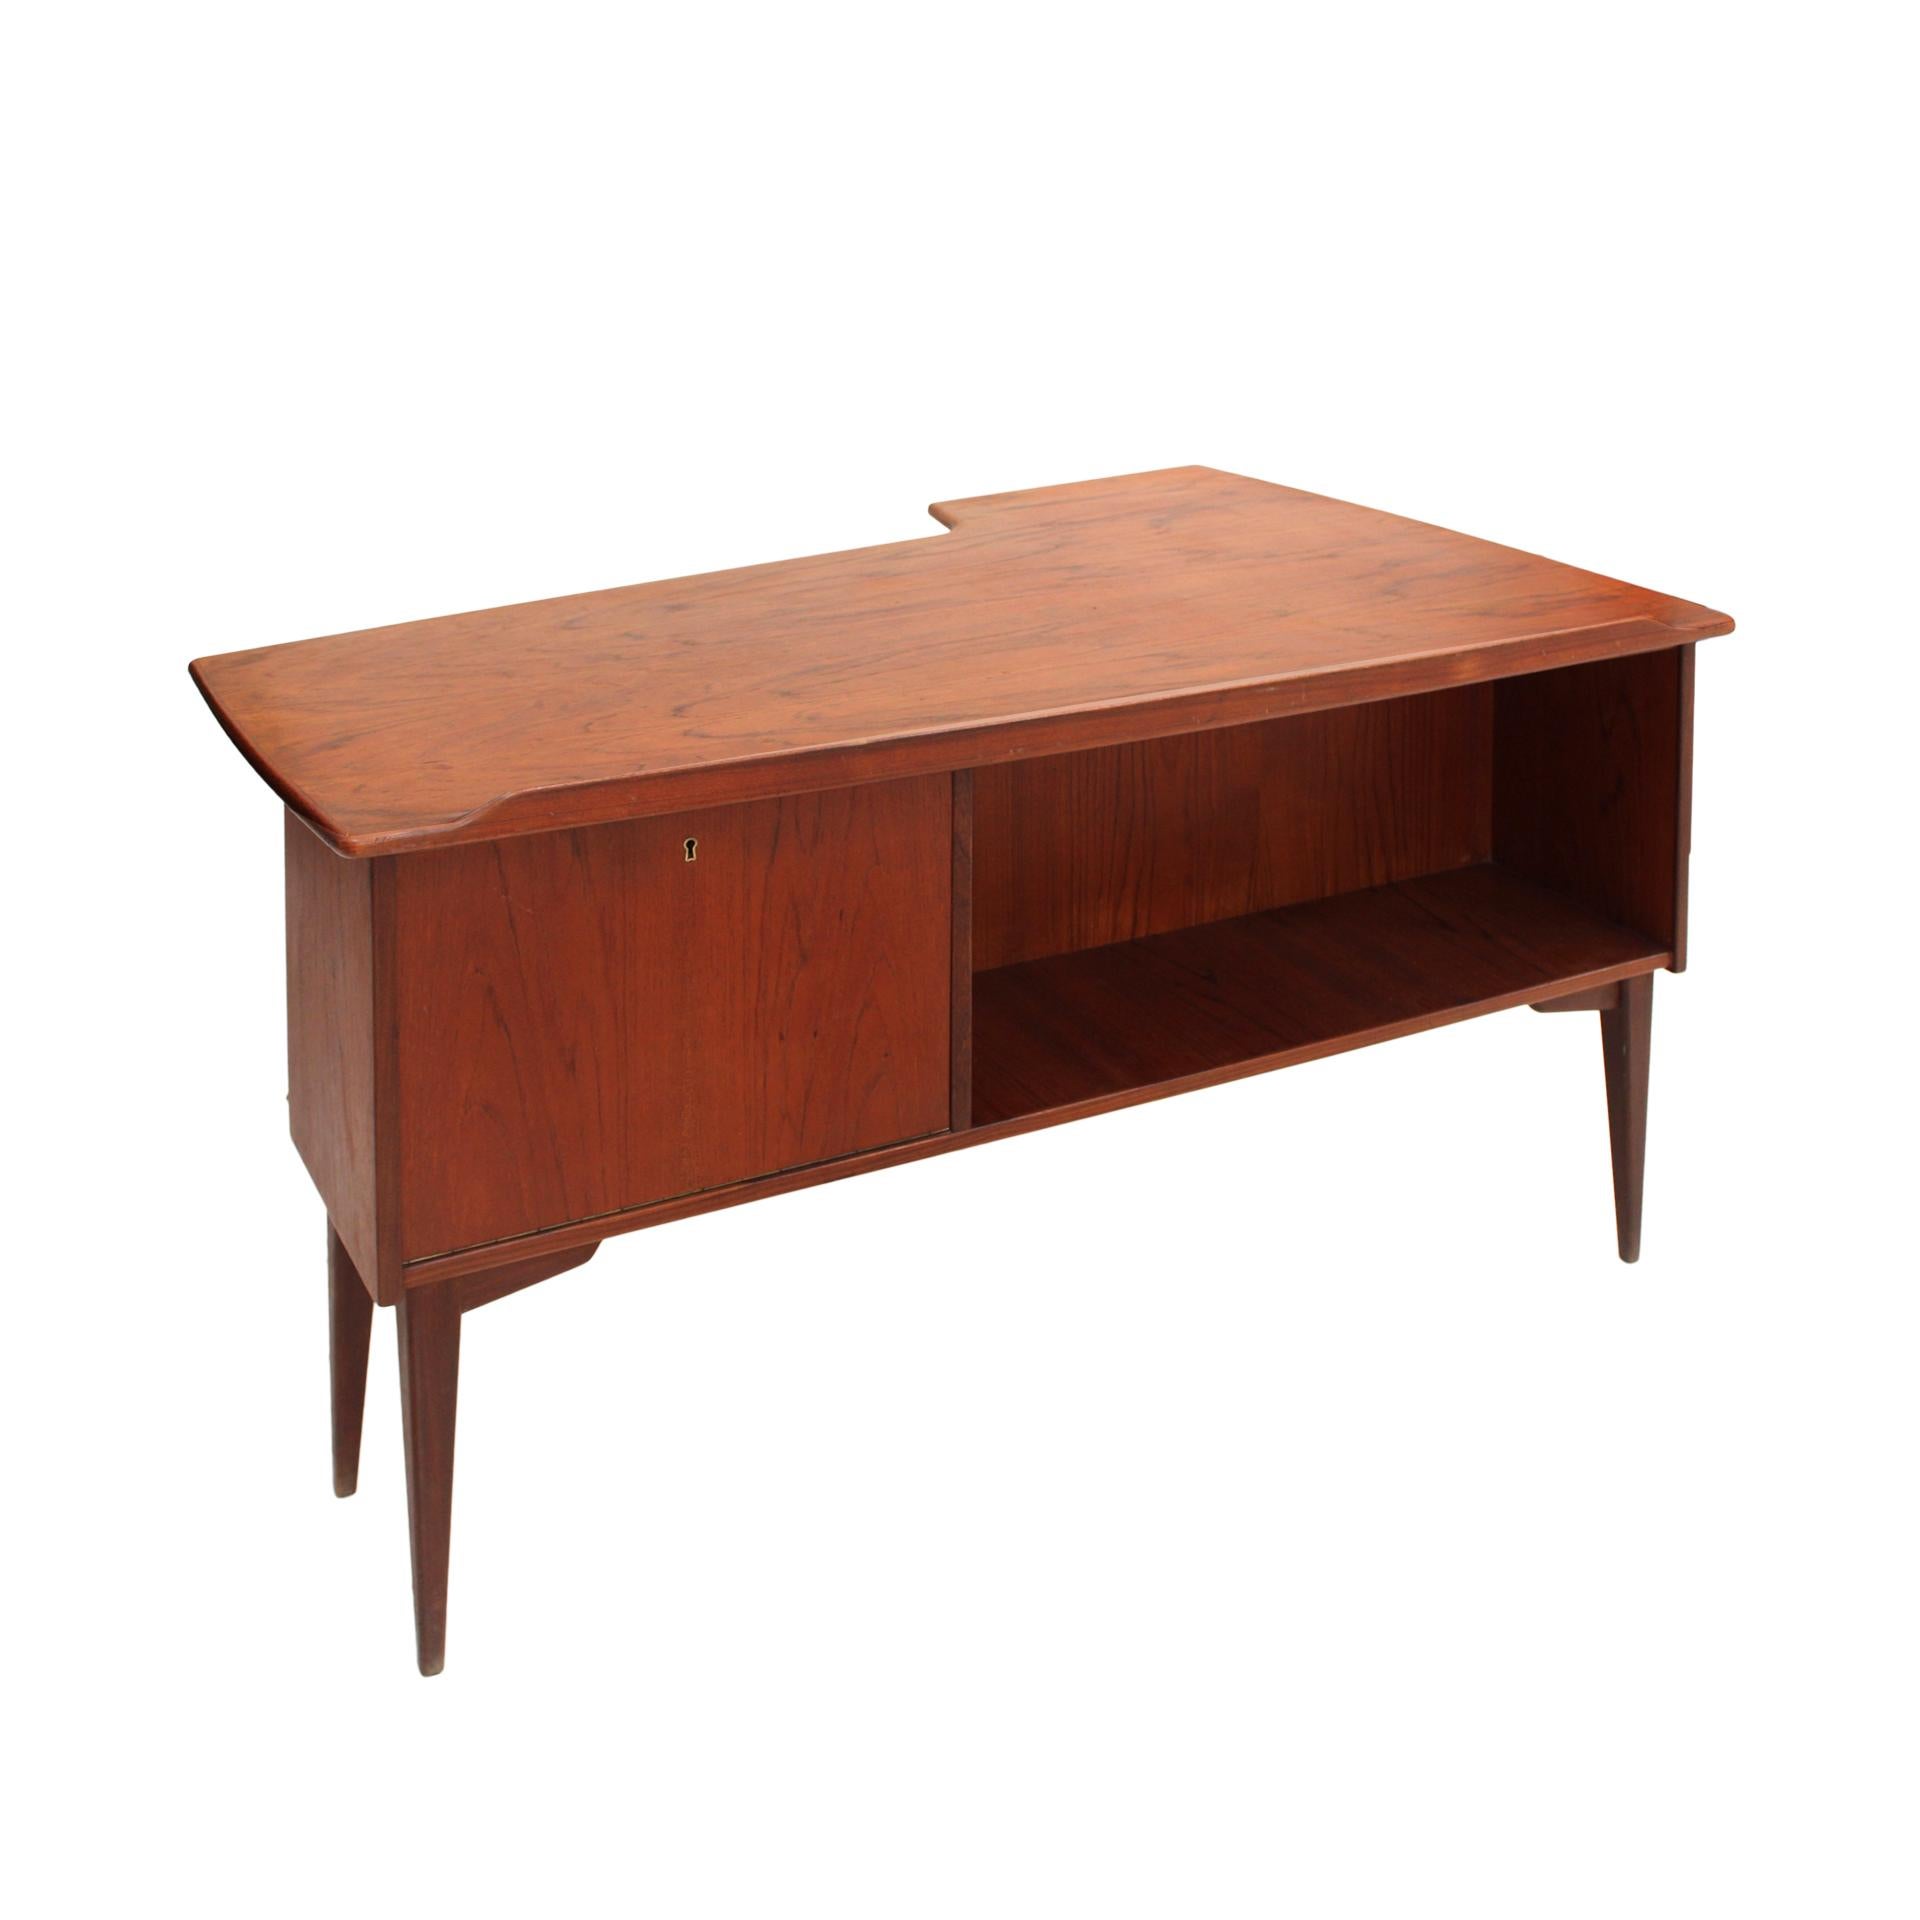 Mid-20th Century Midcentury Solid Wood Desk Designed by Arne Vodder Boomerang, 1960s